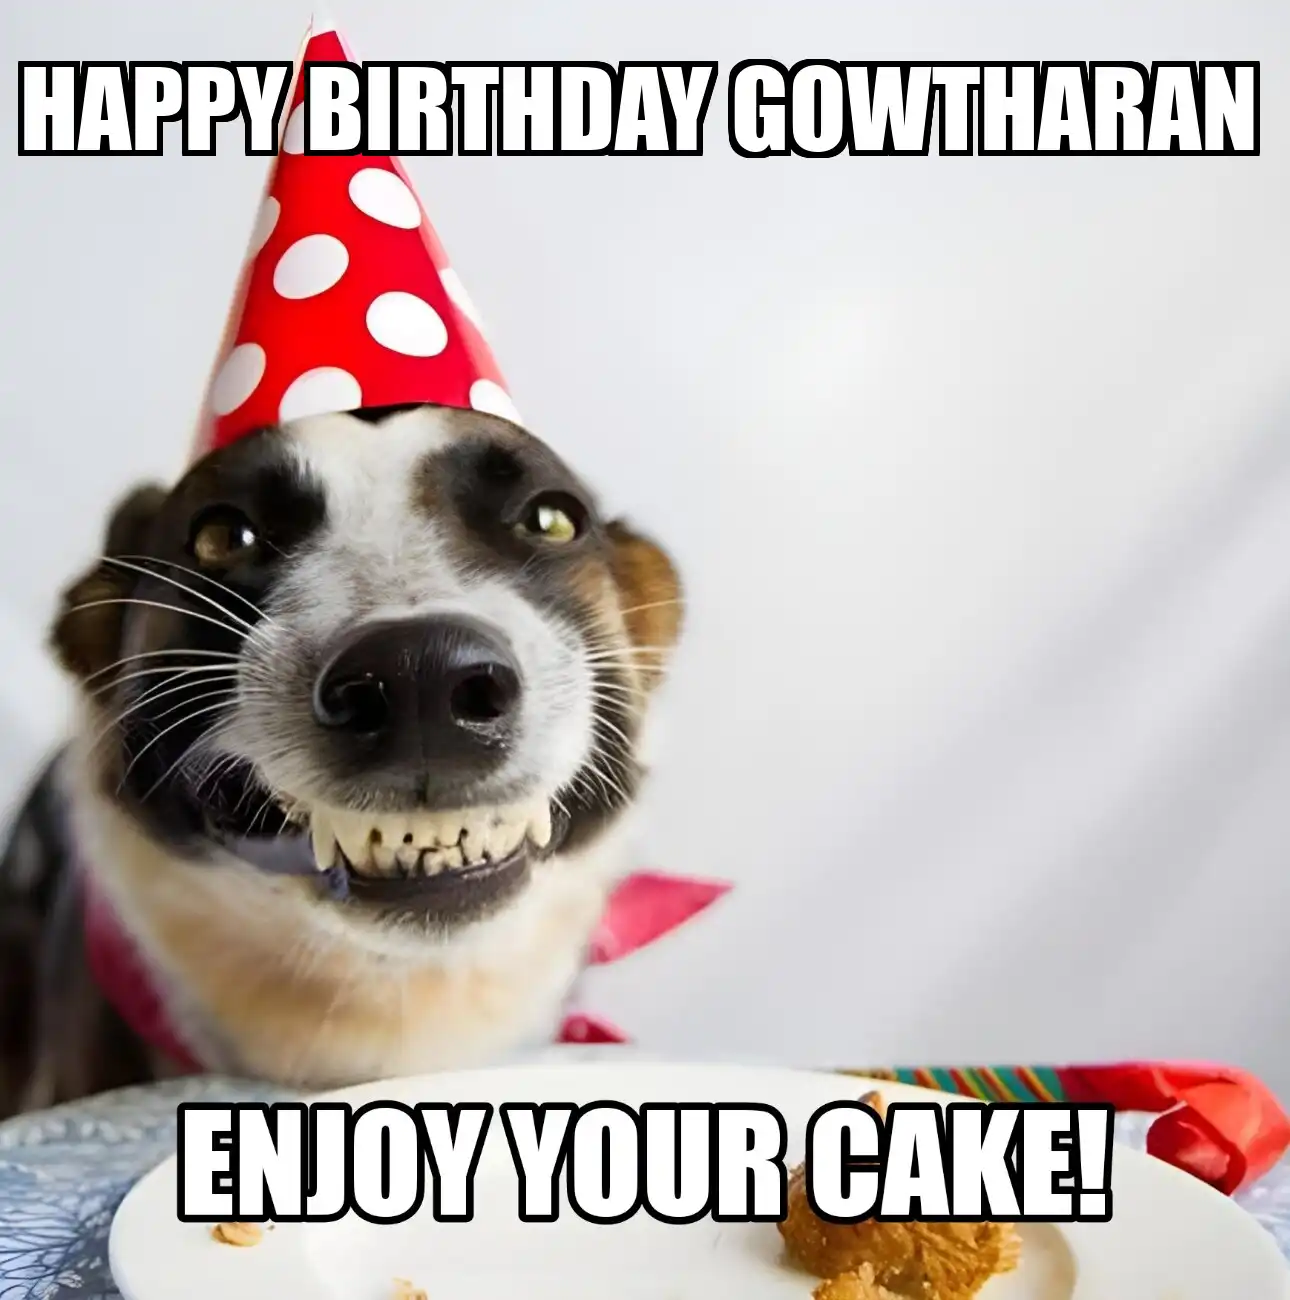 Happy Birthday Gowtharan Enjoy Your Cake Dog Meme